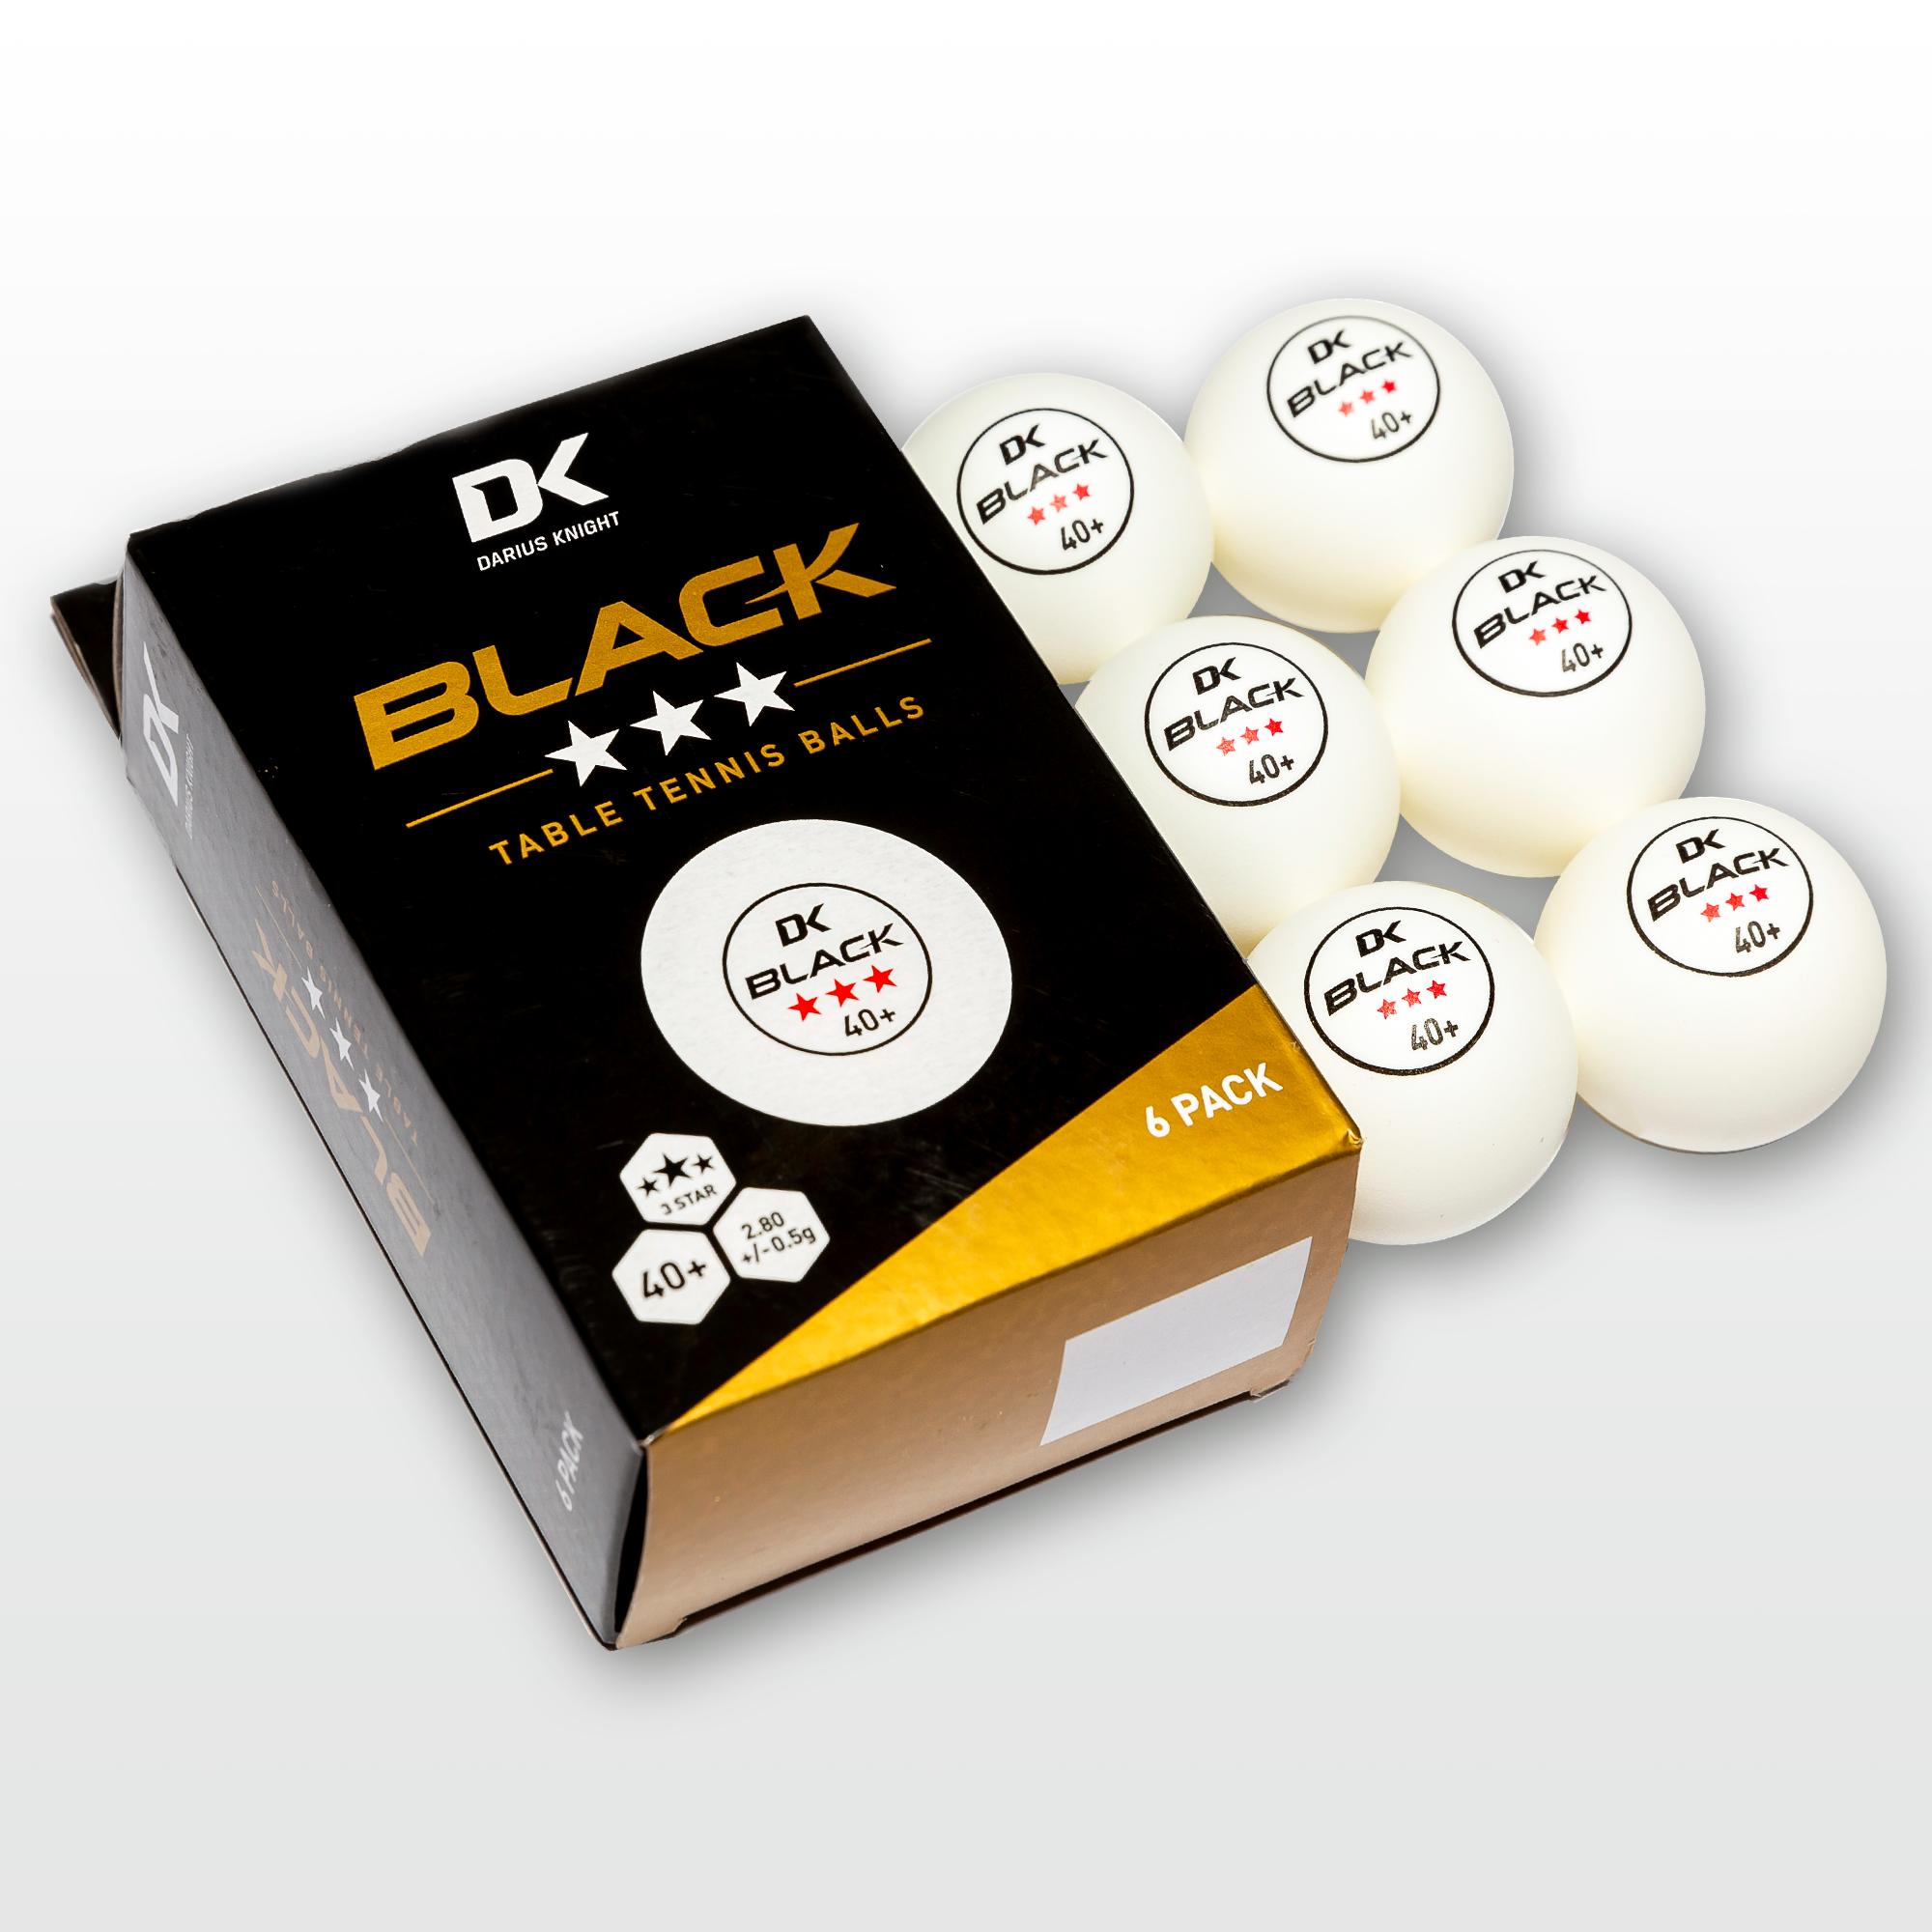 DK Black 40+ 3* Table Tennis Balls 6 Pack - DK Sports